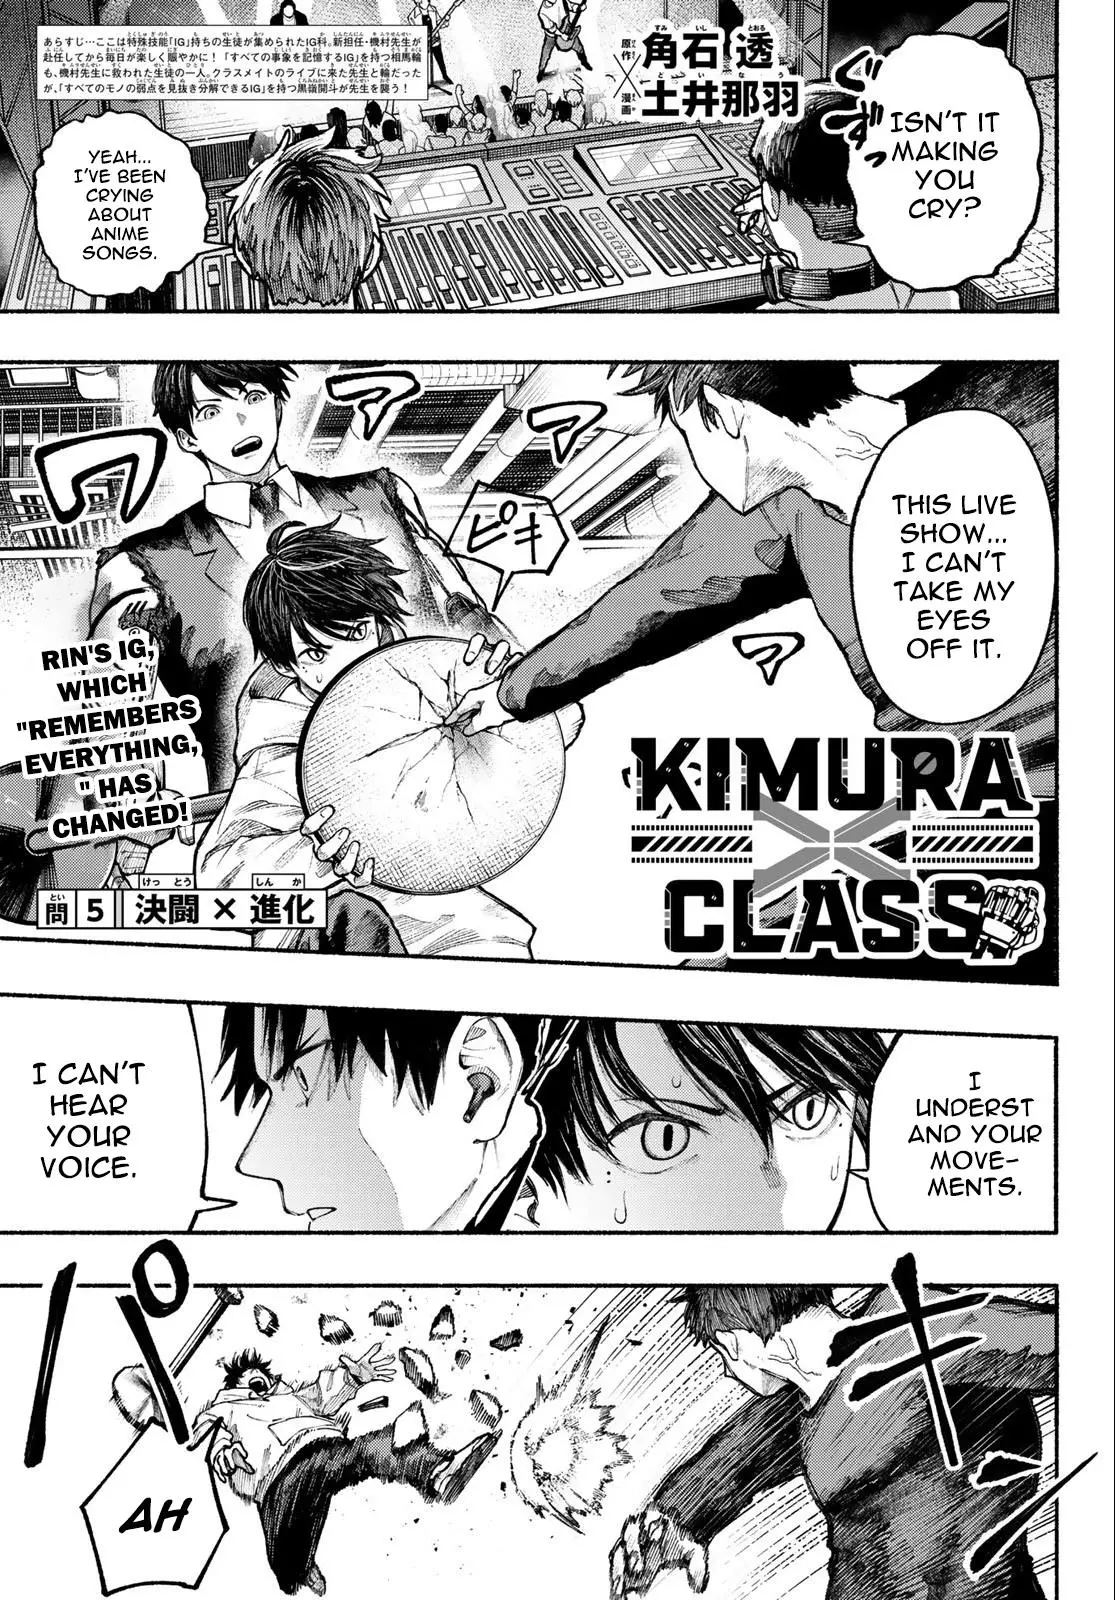 Kimura X Class - 5 page 2-4a596d40